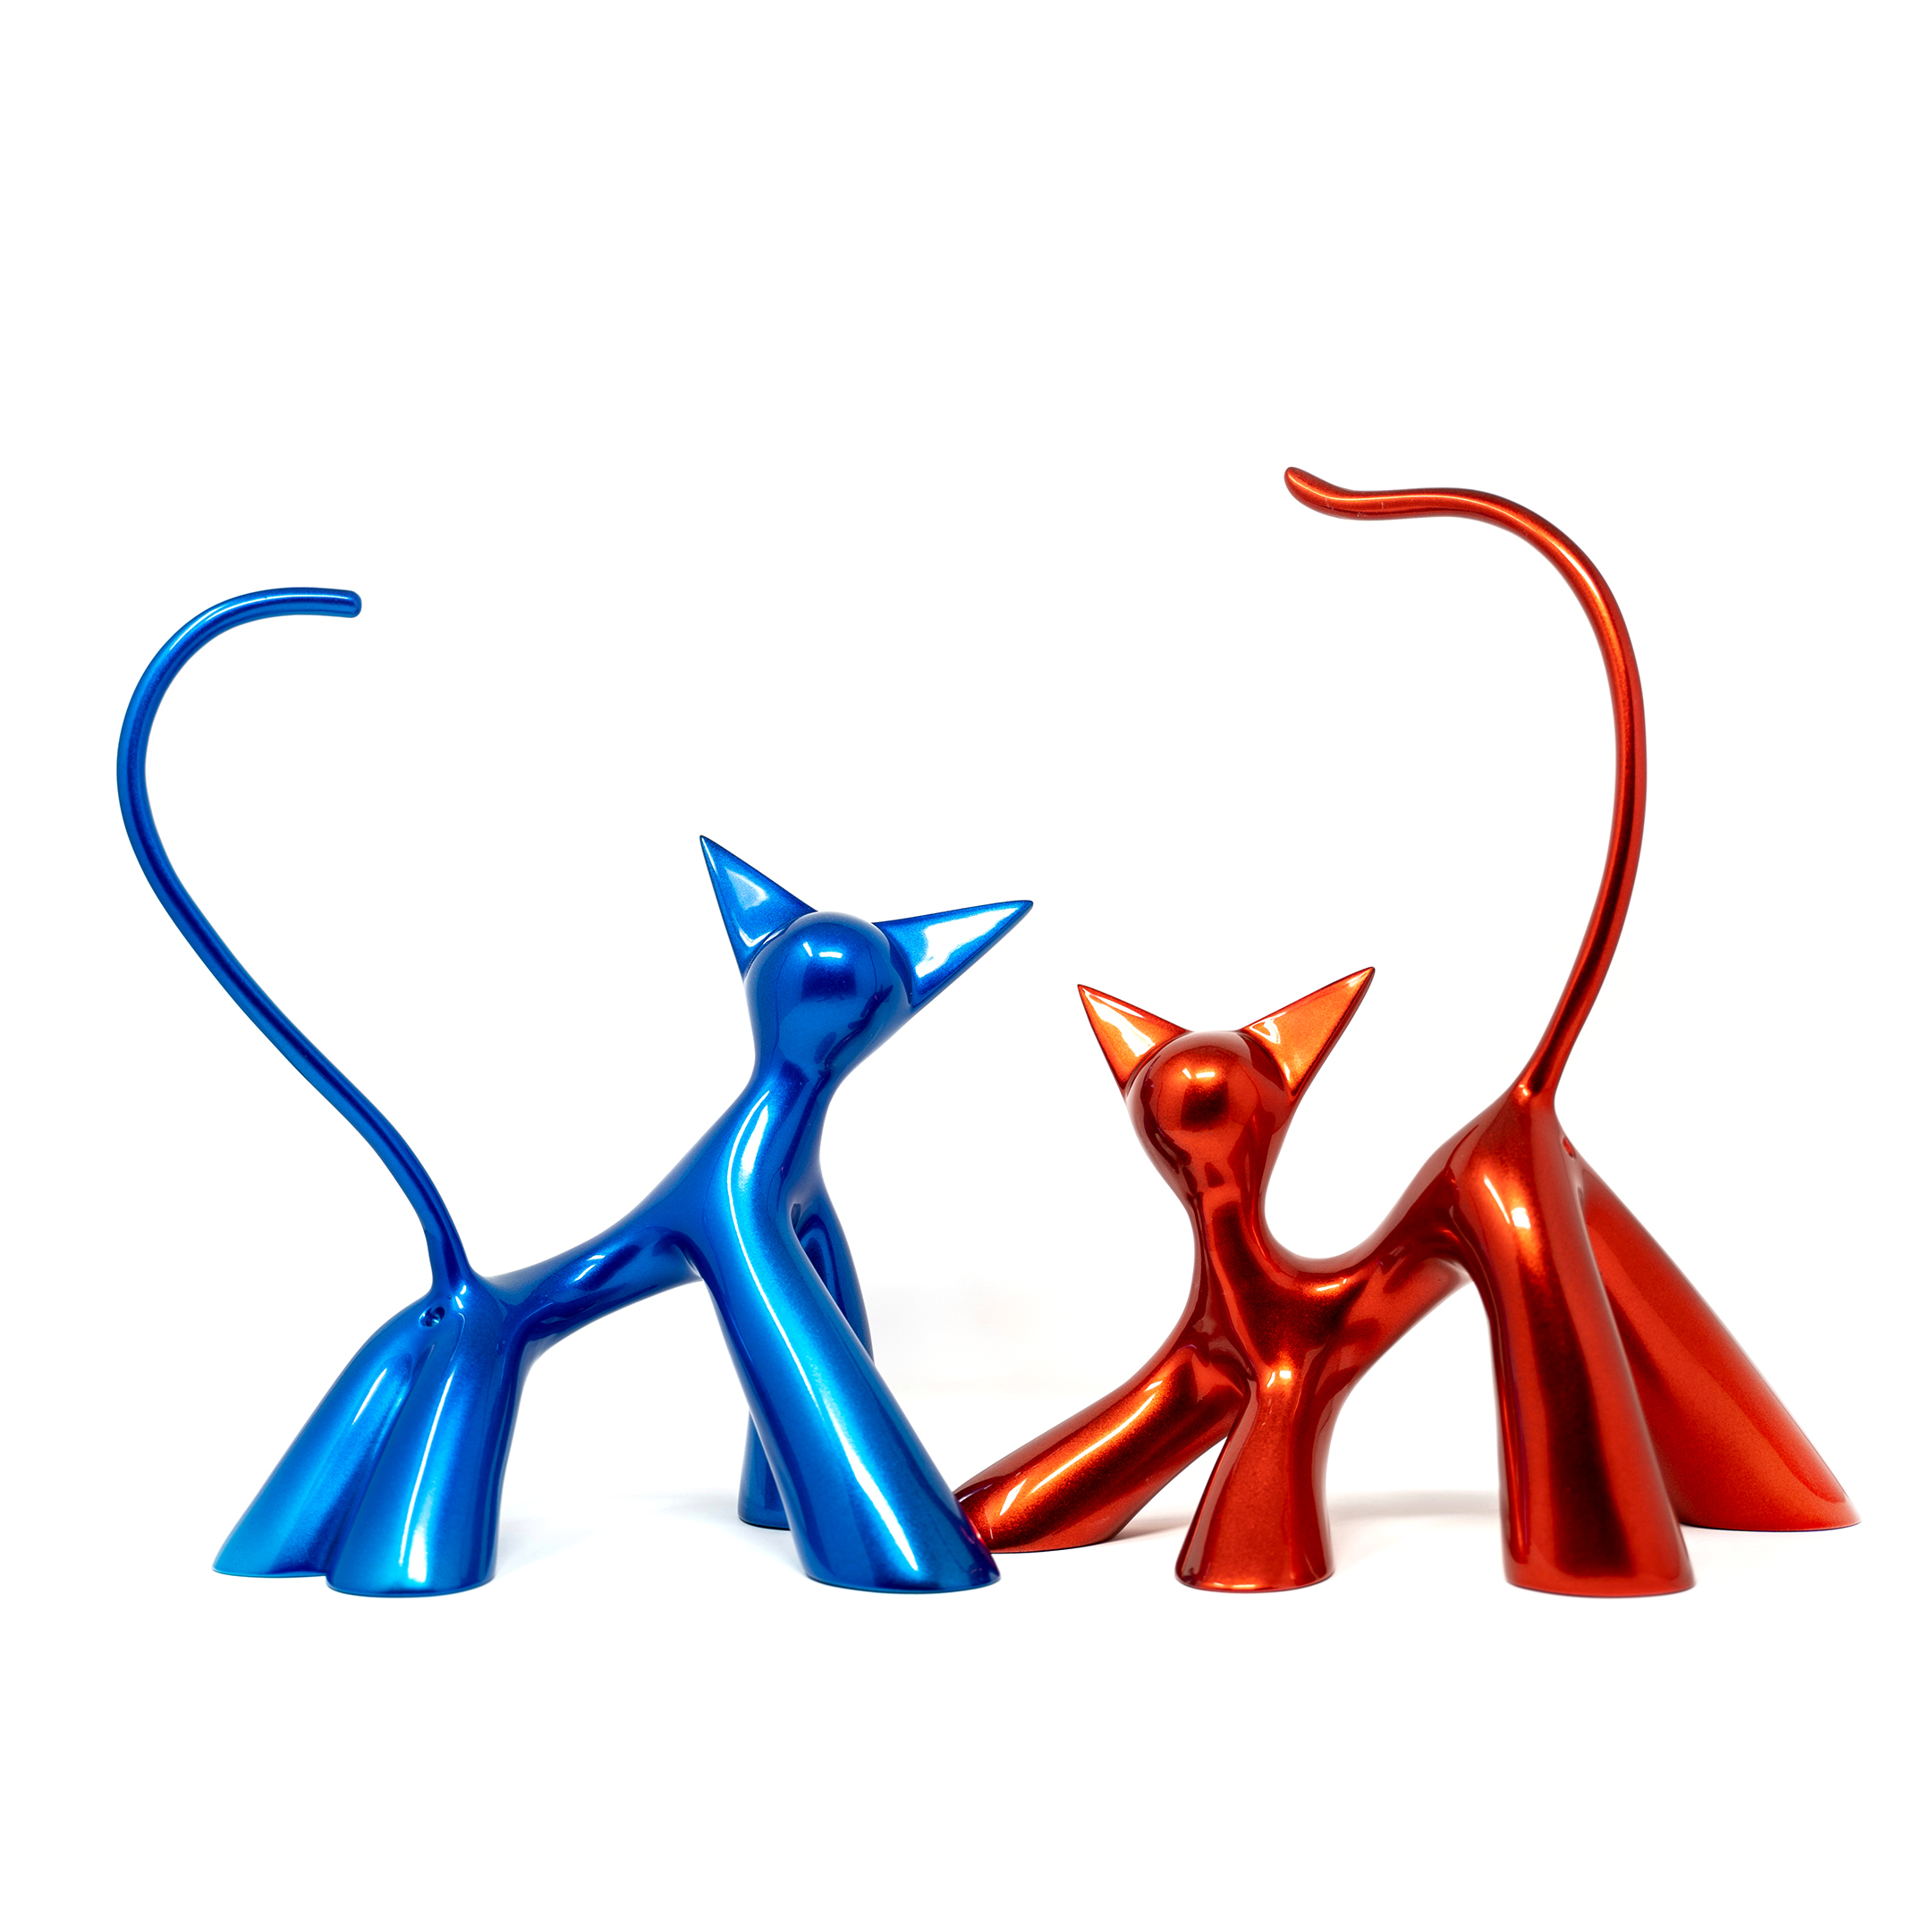 Arteido - Lolek - Sculpture - CatArteido - Lolek - Sculpture - Cat - Bronze - La Bobine et la Brioche